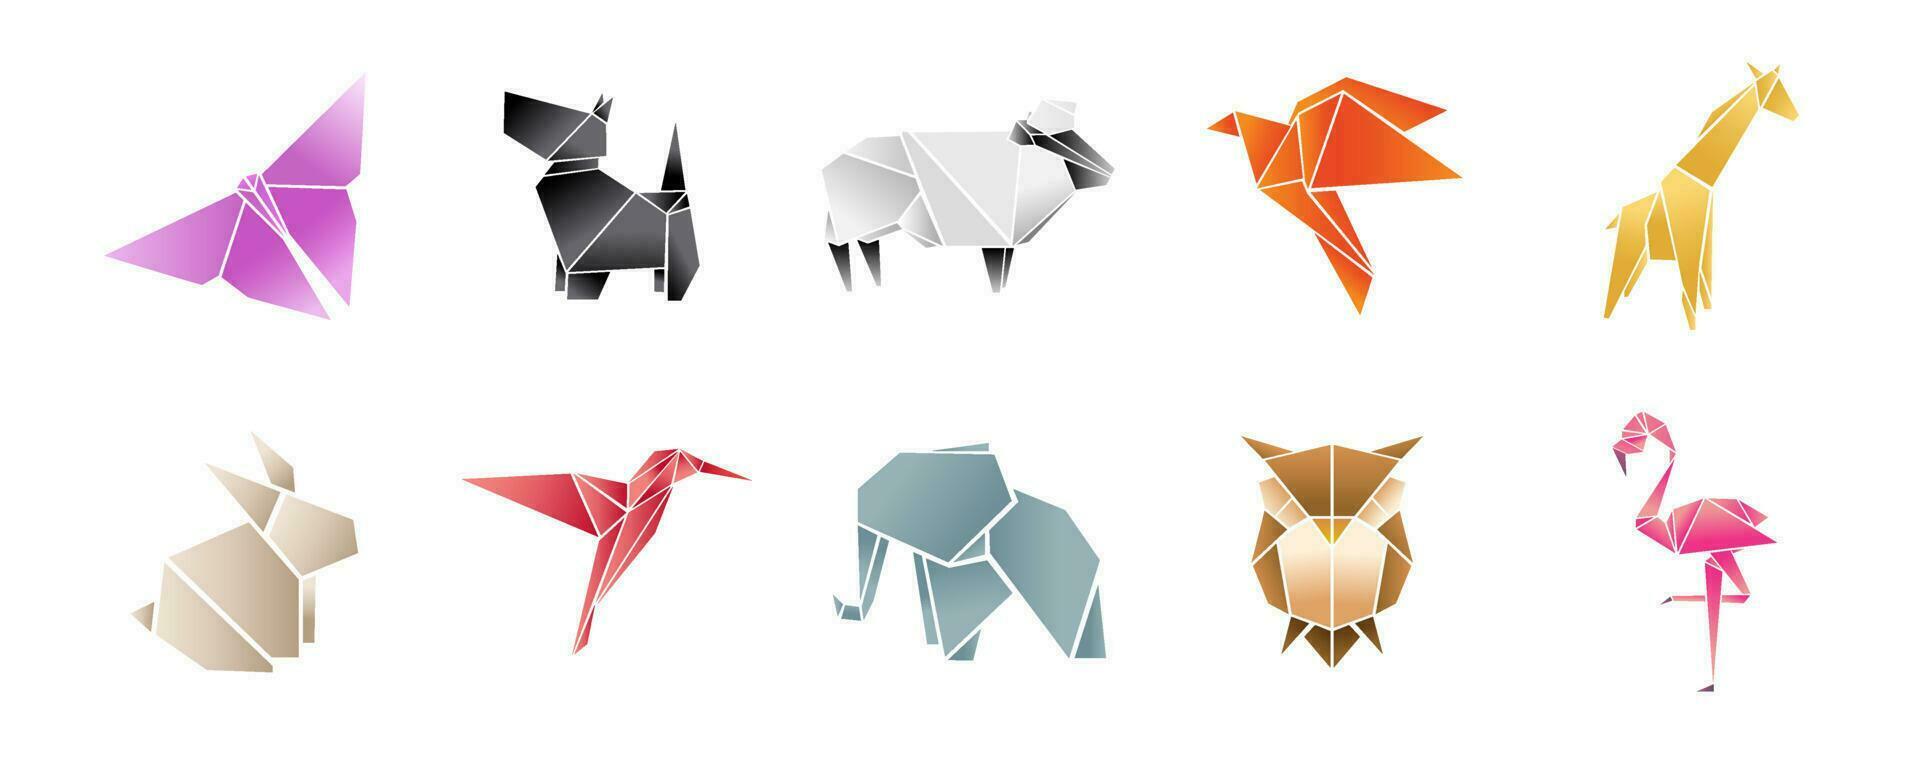 Origami paper animals asian creative vector art. Origami japan animal butterfly, dog terrier, elephant, owl, sheep, bird and giraffe illustration